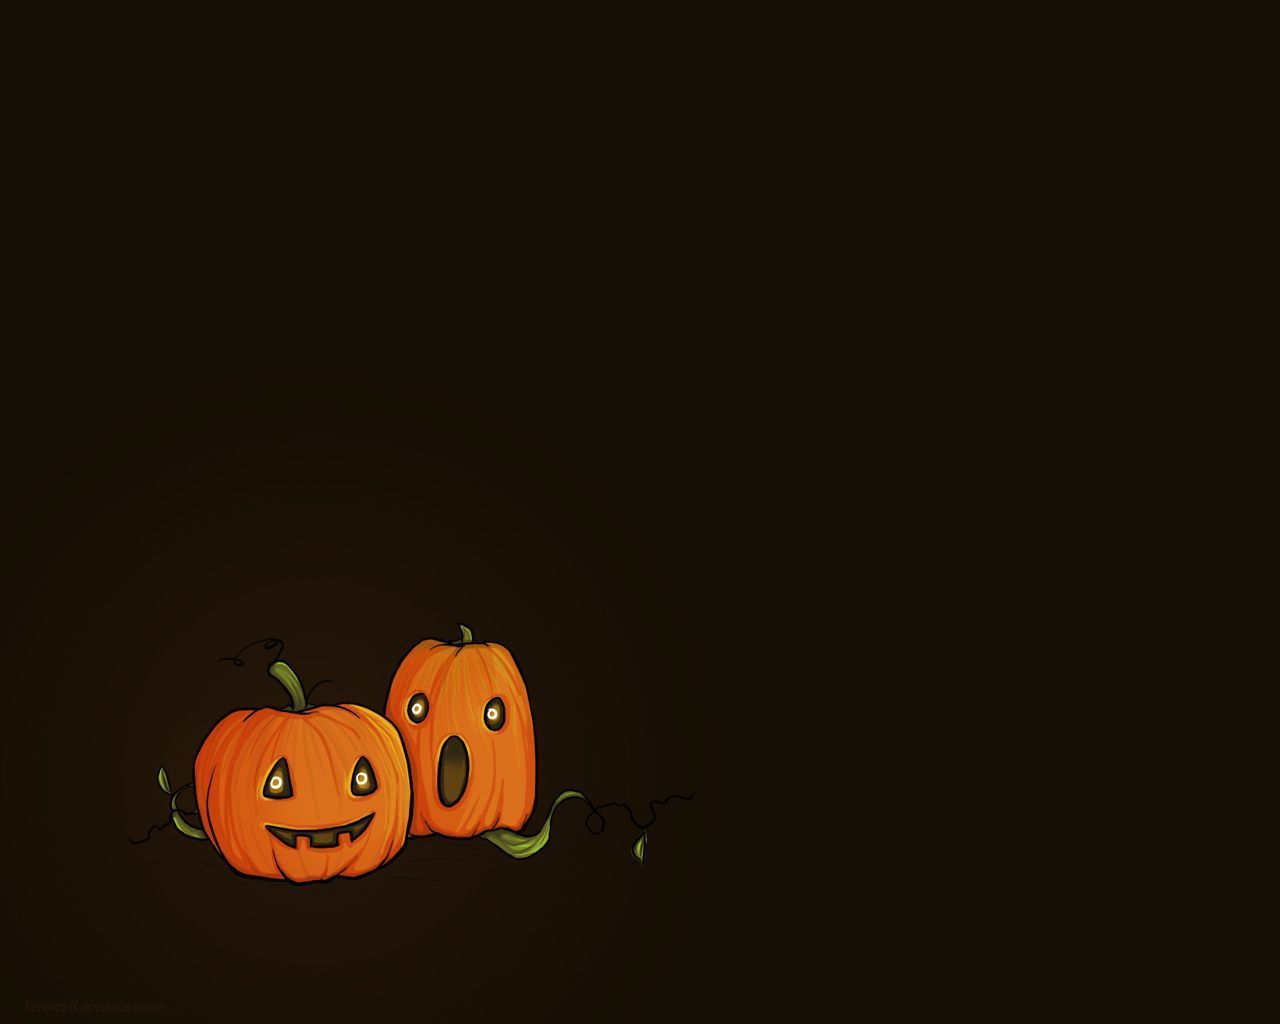 A halloween wallpaper with two pumpkins on it - Halloween desktop